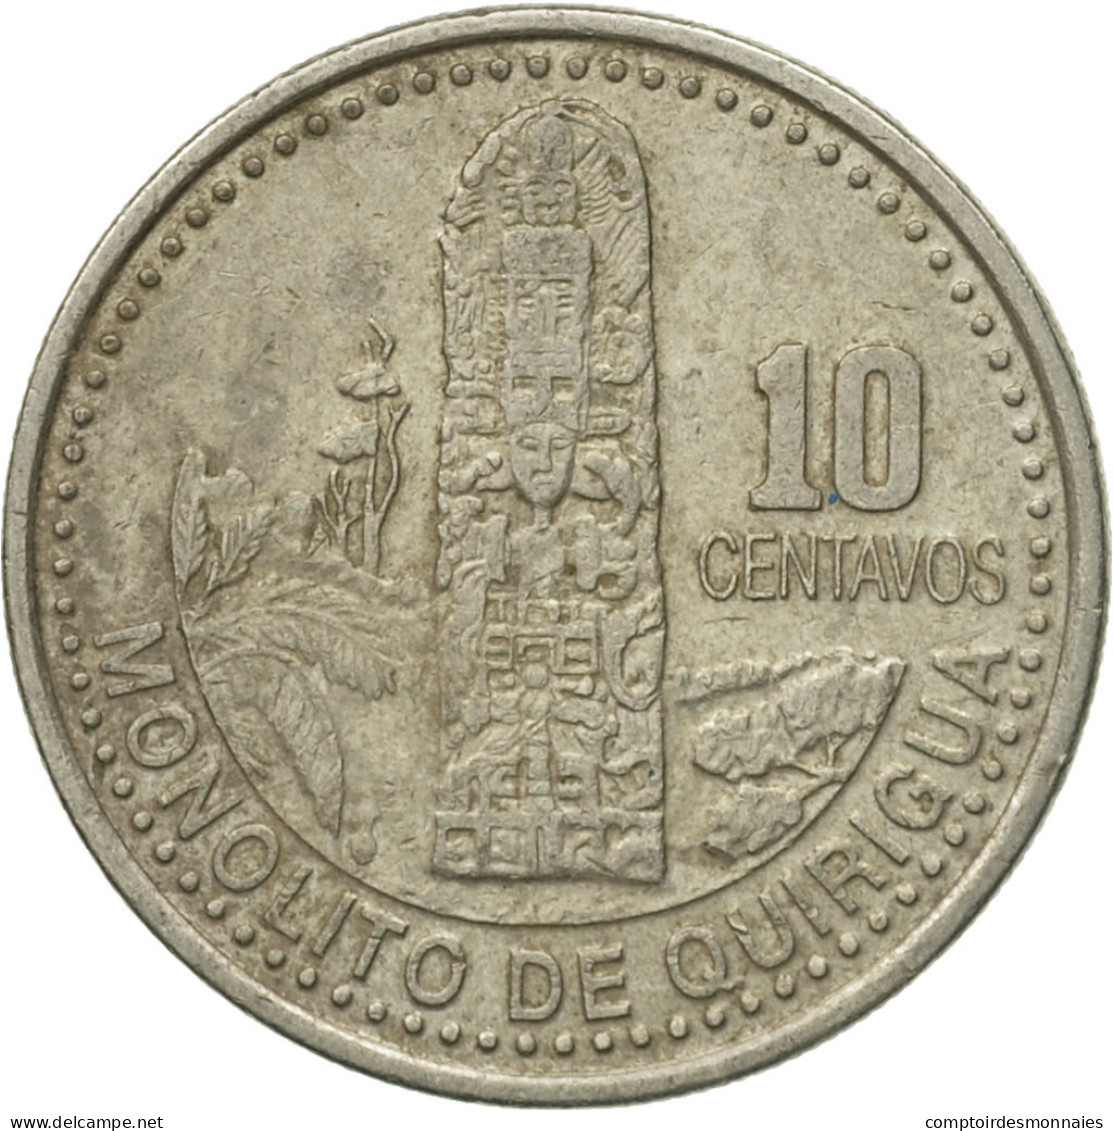 Monnaie, Guatemala, 10 Centavos, 2006, TB+, Copper-nickel, KM:277.6 - Guatemala